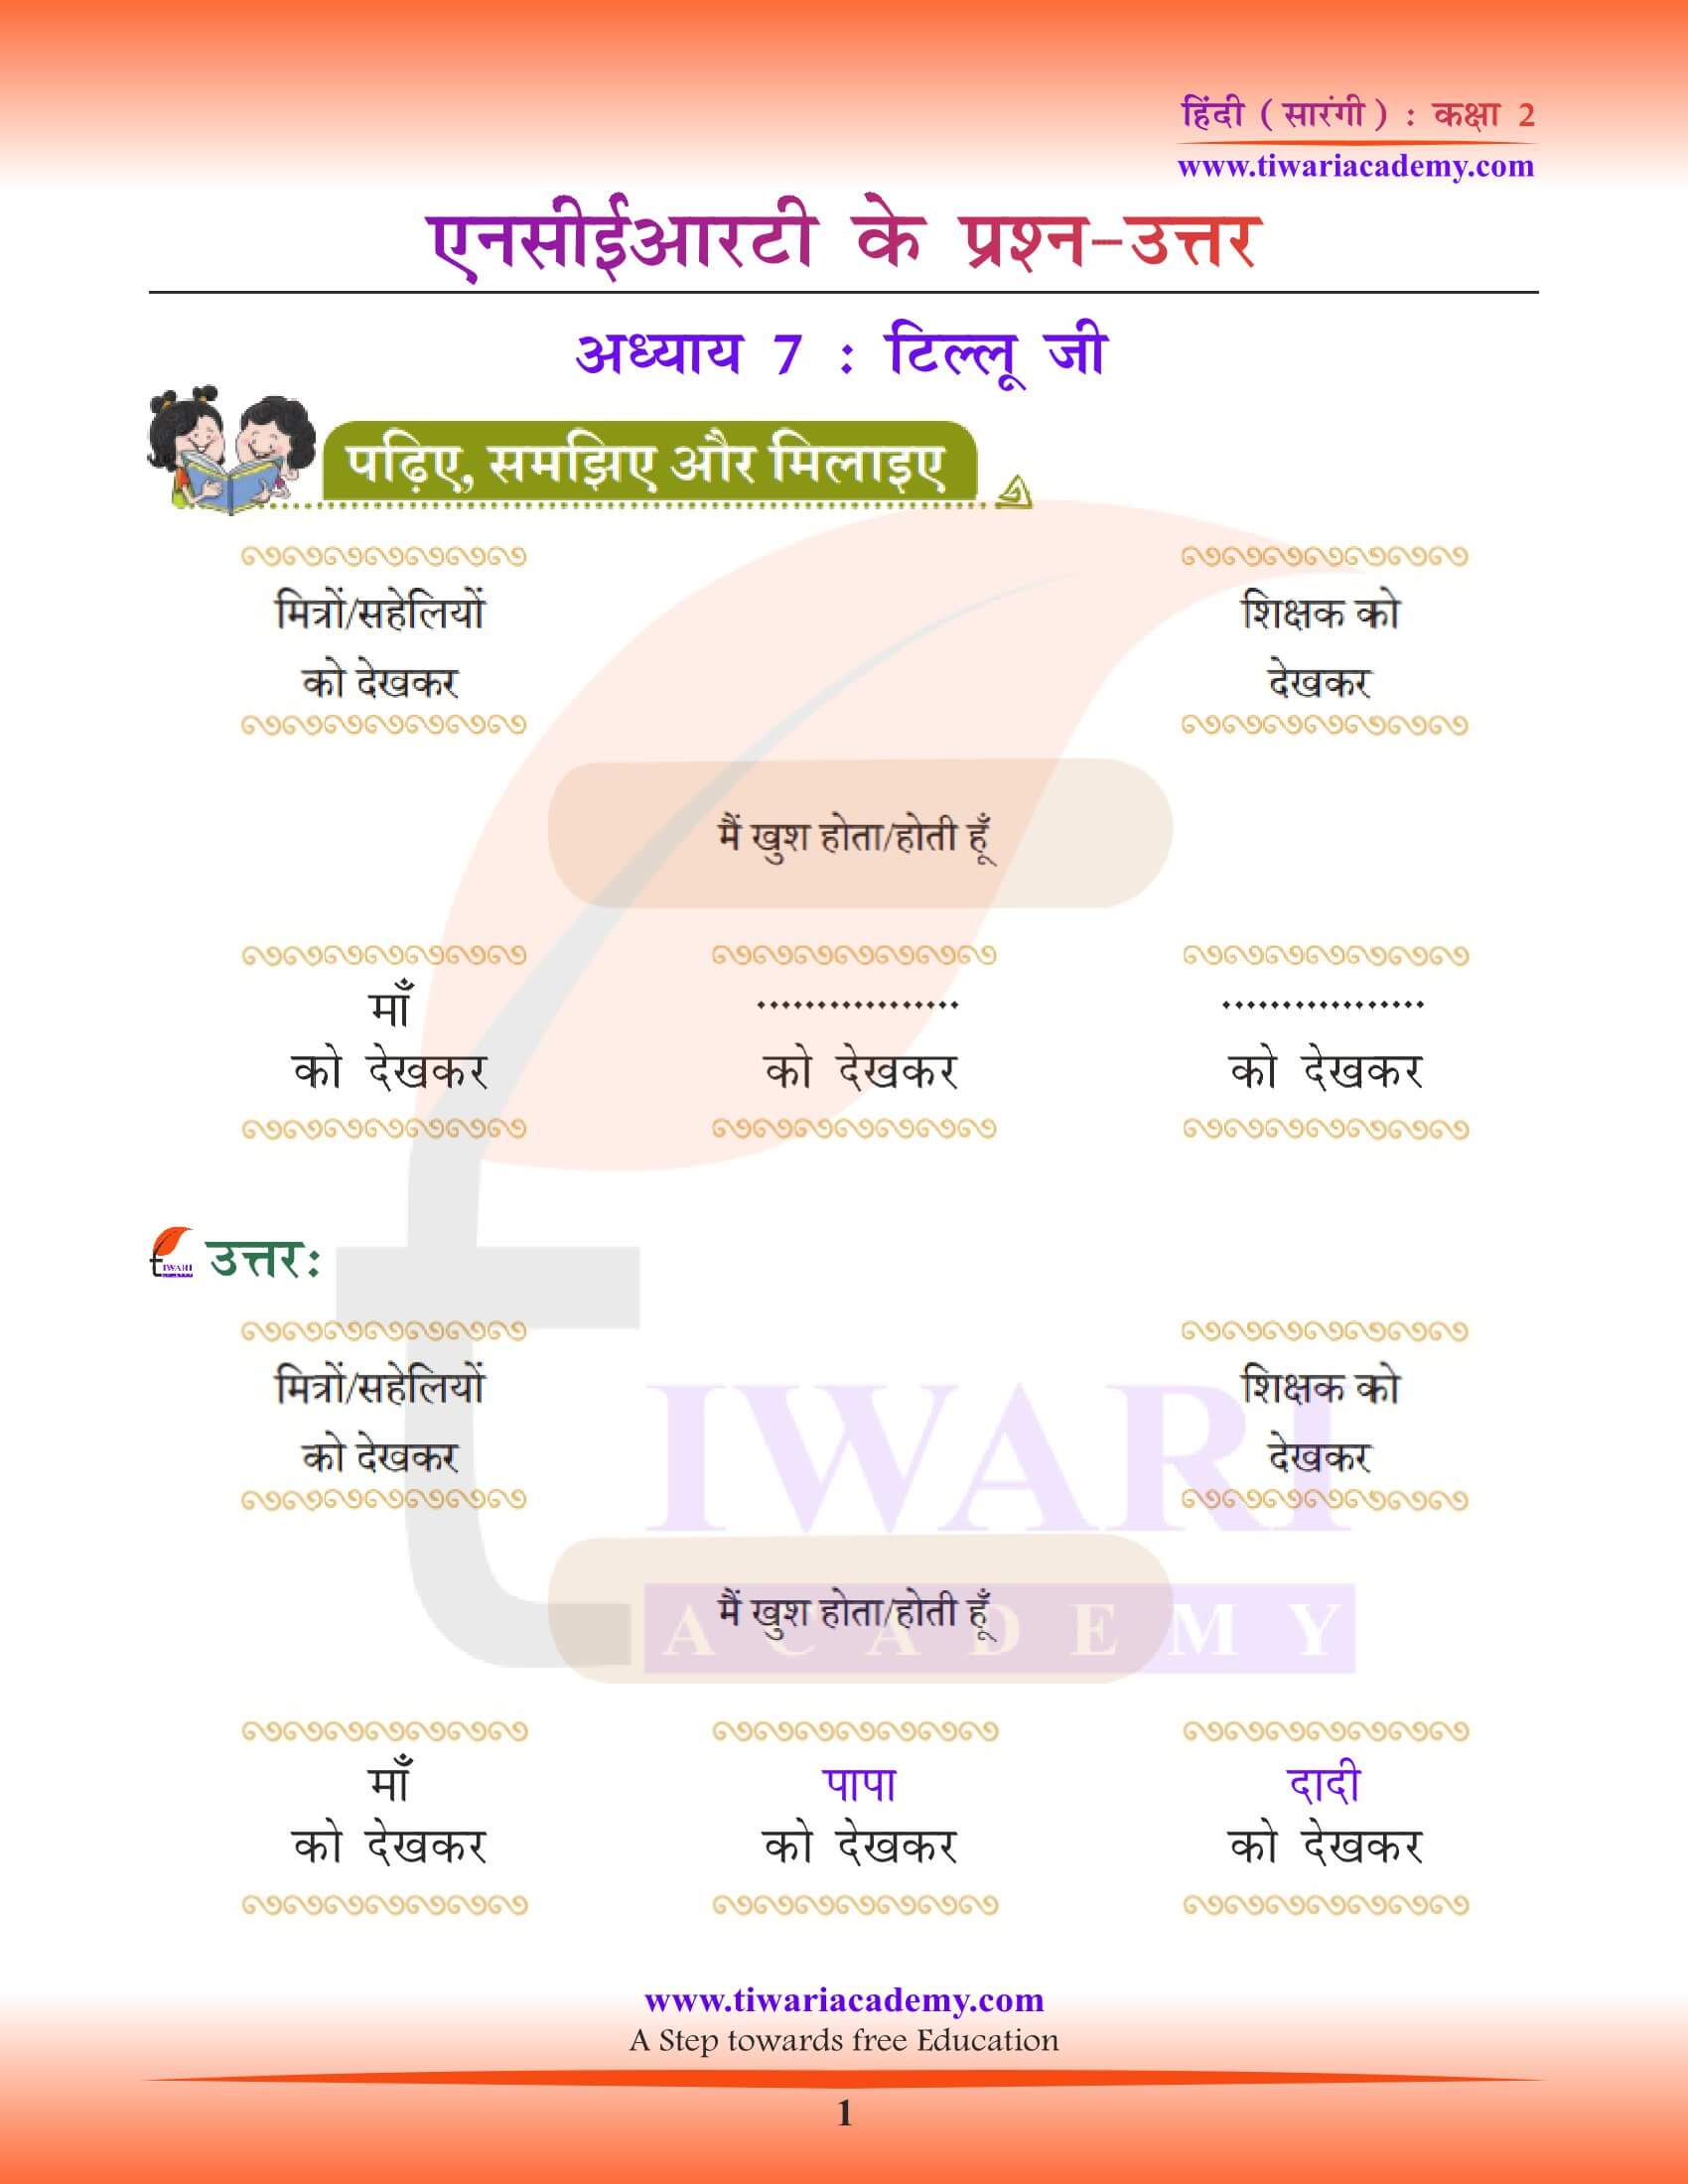 कक्षा 2 हिंदी सारंगी अध्याय 7 टिल्‍लू जी